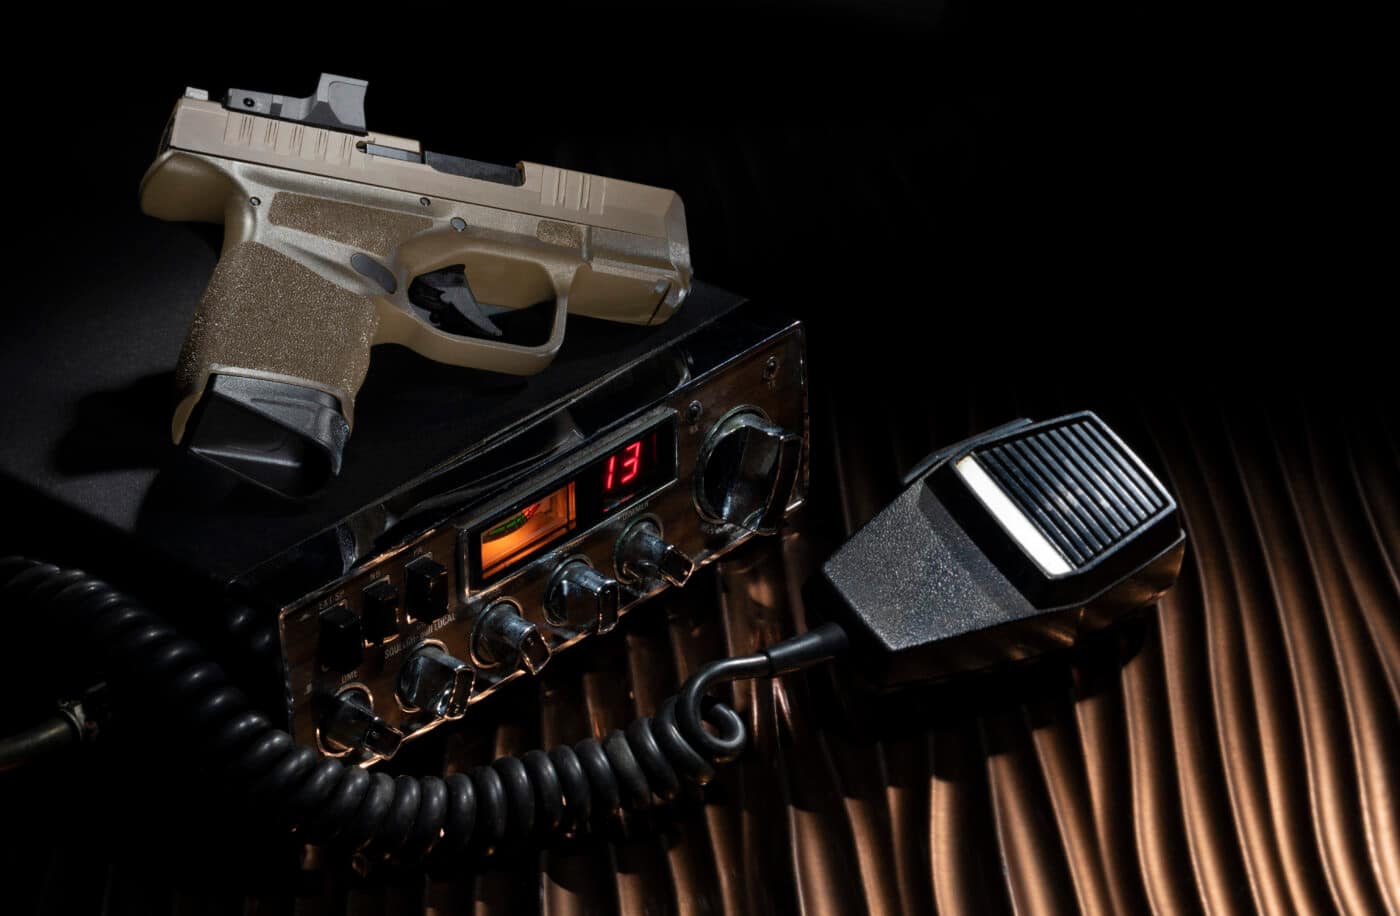 Springfield Hellcat pistol on top of an emergency radio